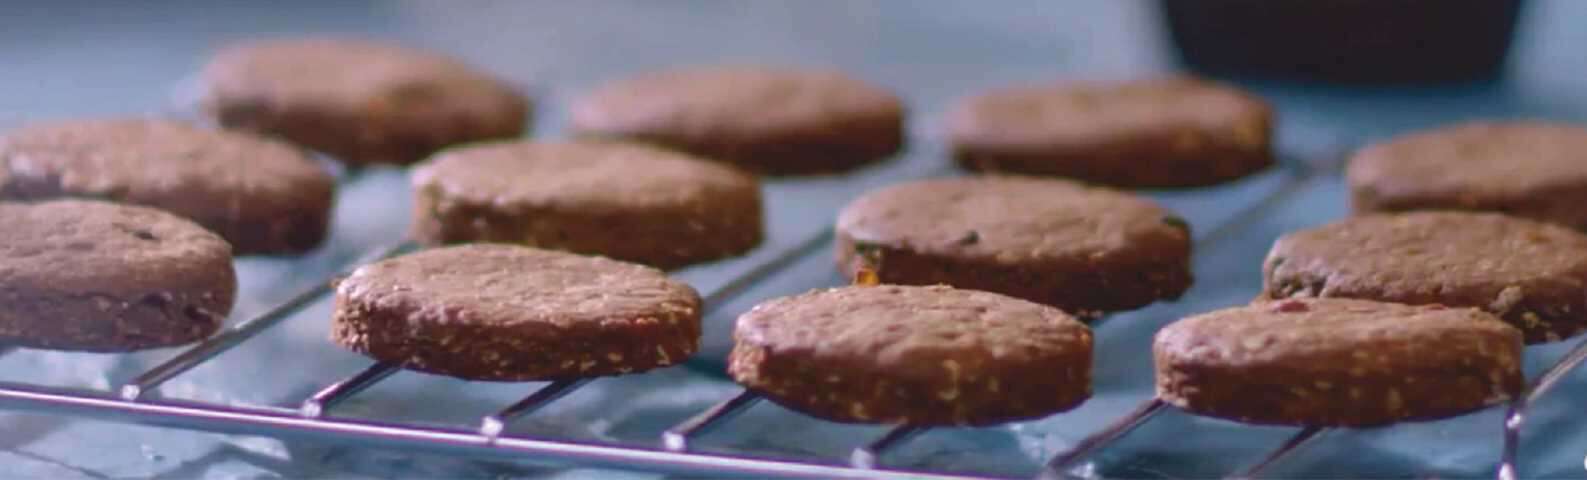 i World Baking Day - Chilli Choco-Oat Cookies - Chef Ranveer Brar